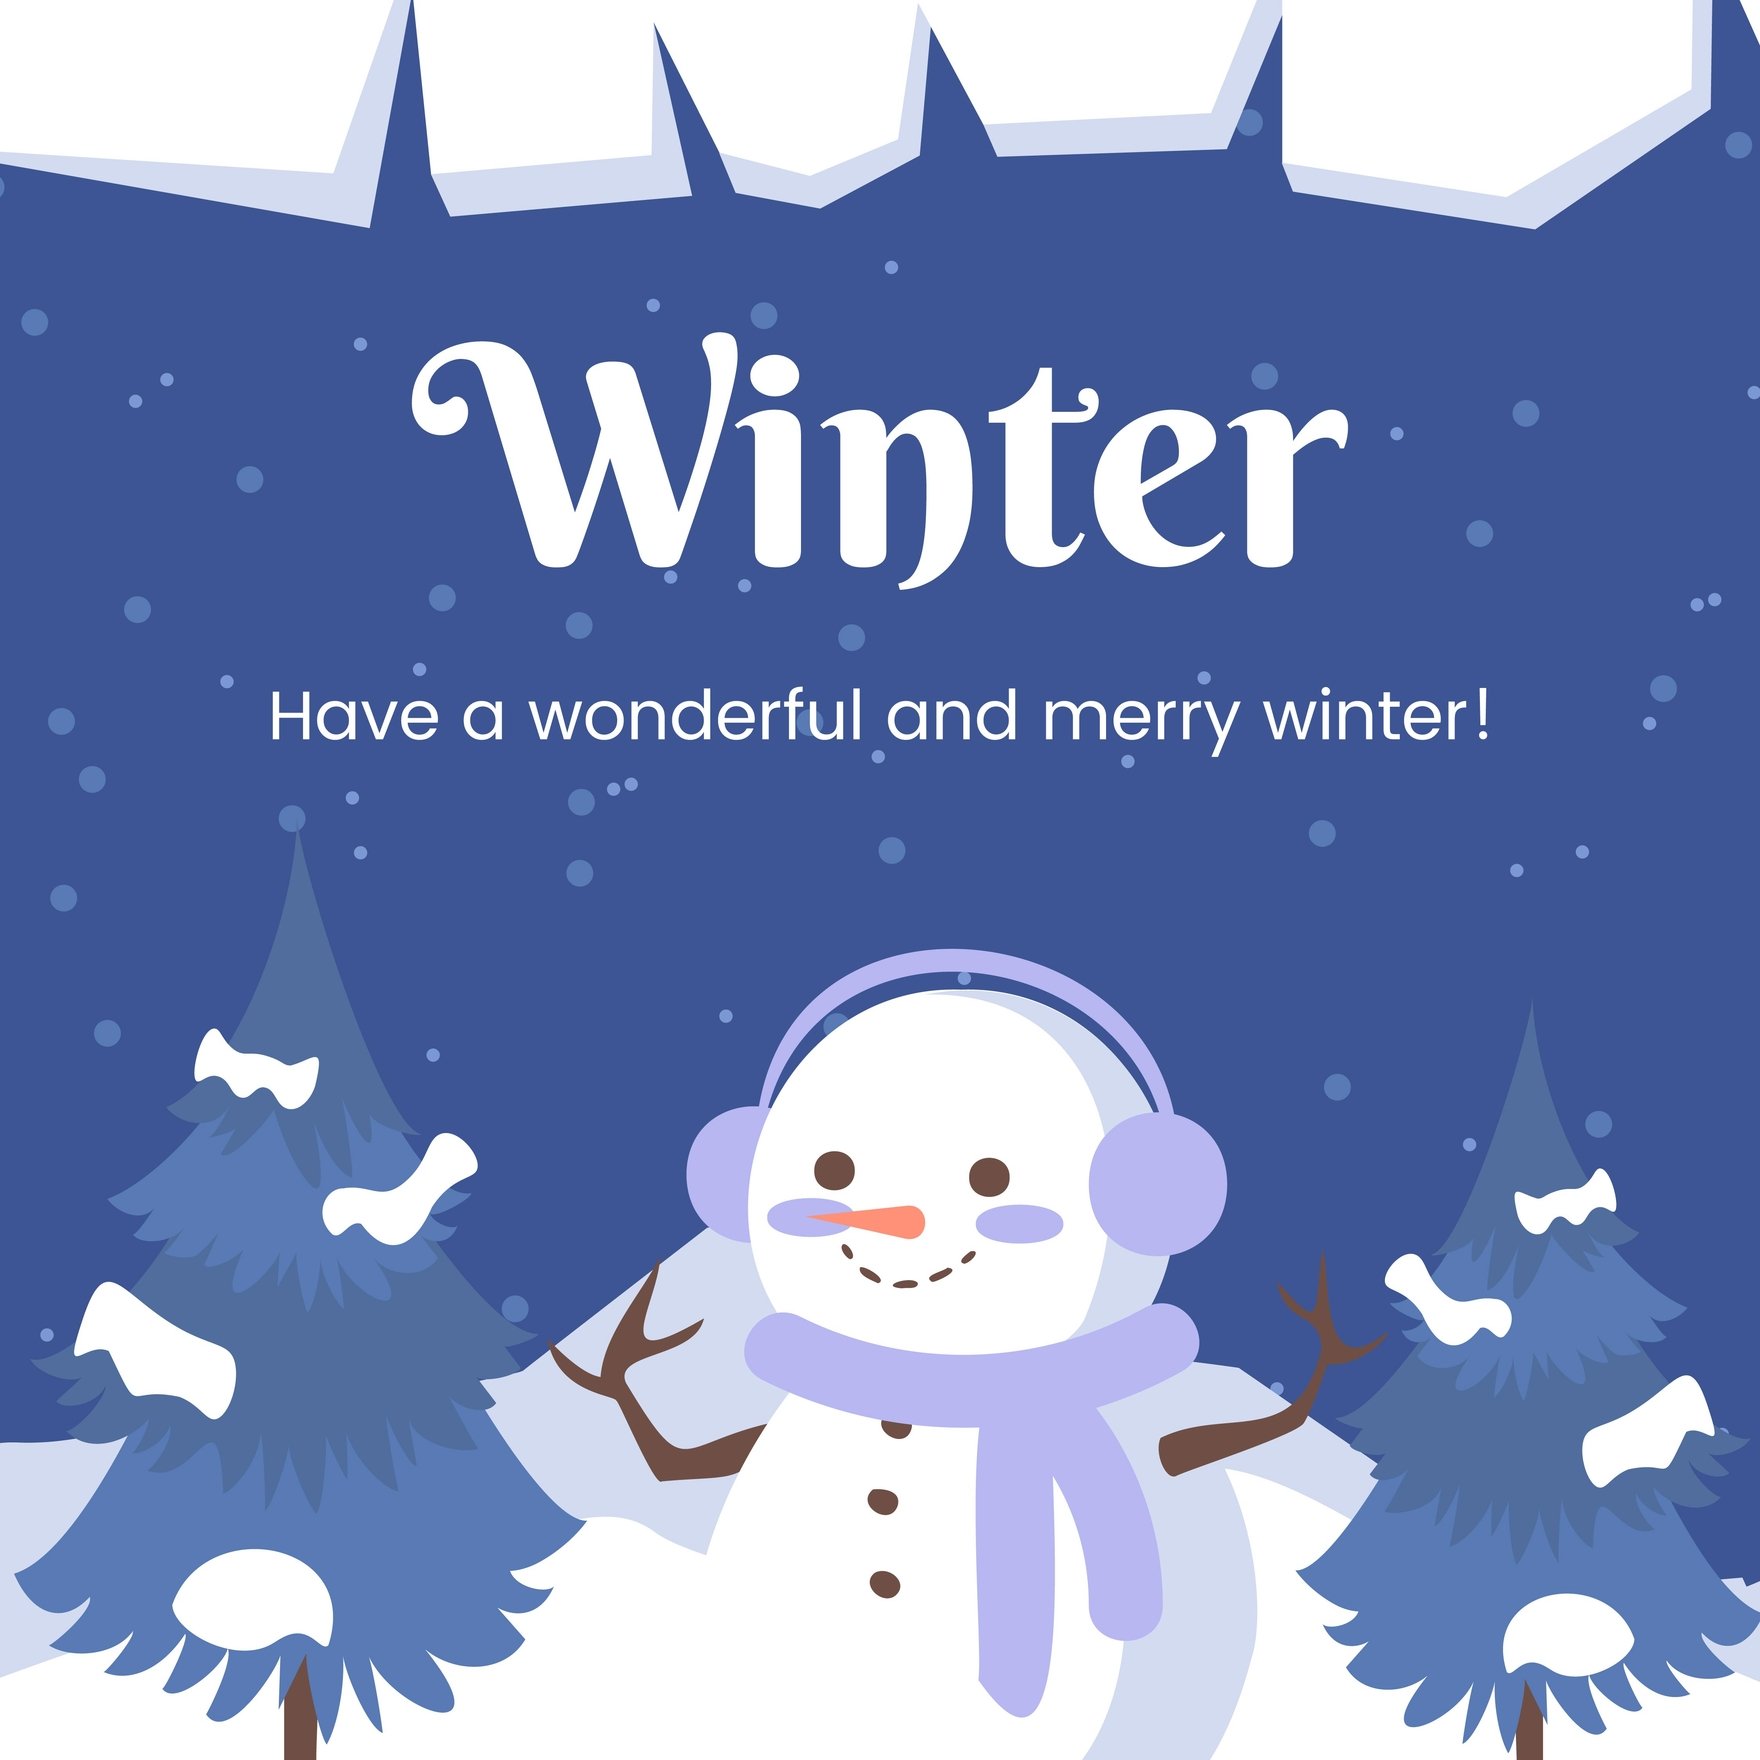 Winter FB Post in Illustrator, PSD, EPS, SVG, JPG, PNG